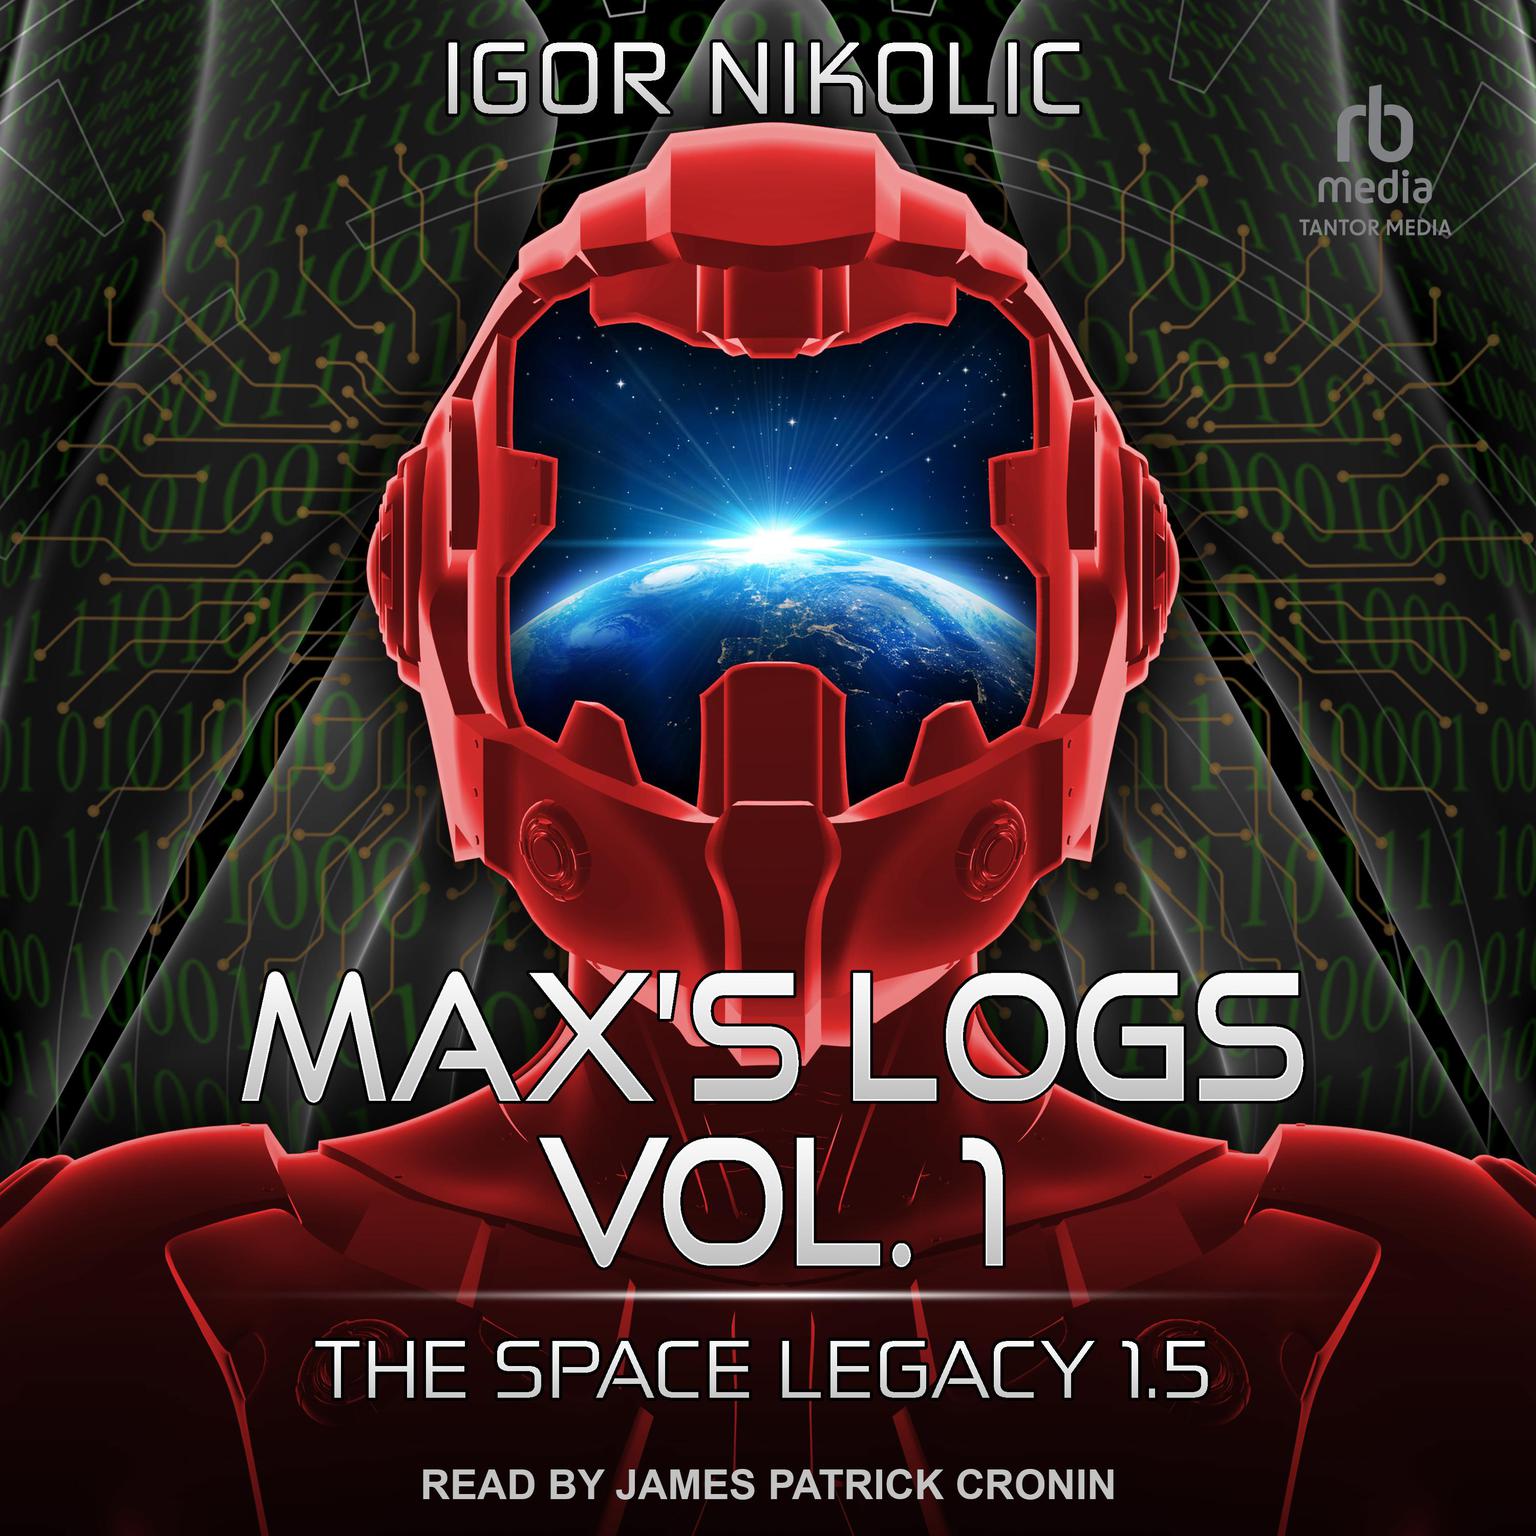 Max’s Logs Vol. 1 Audiobook, by Igor Nikolic